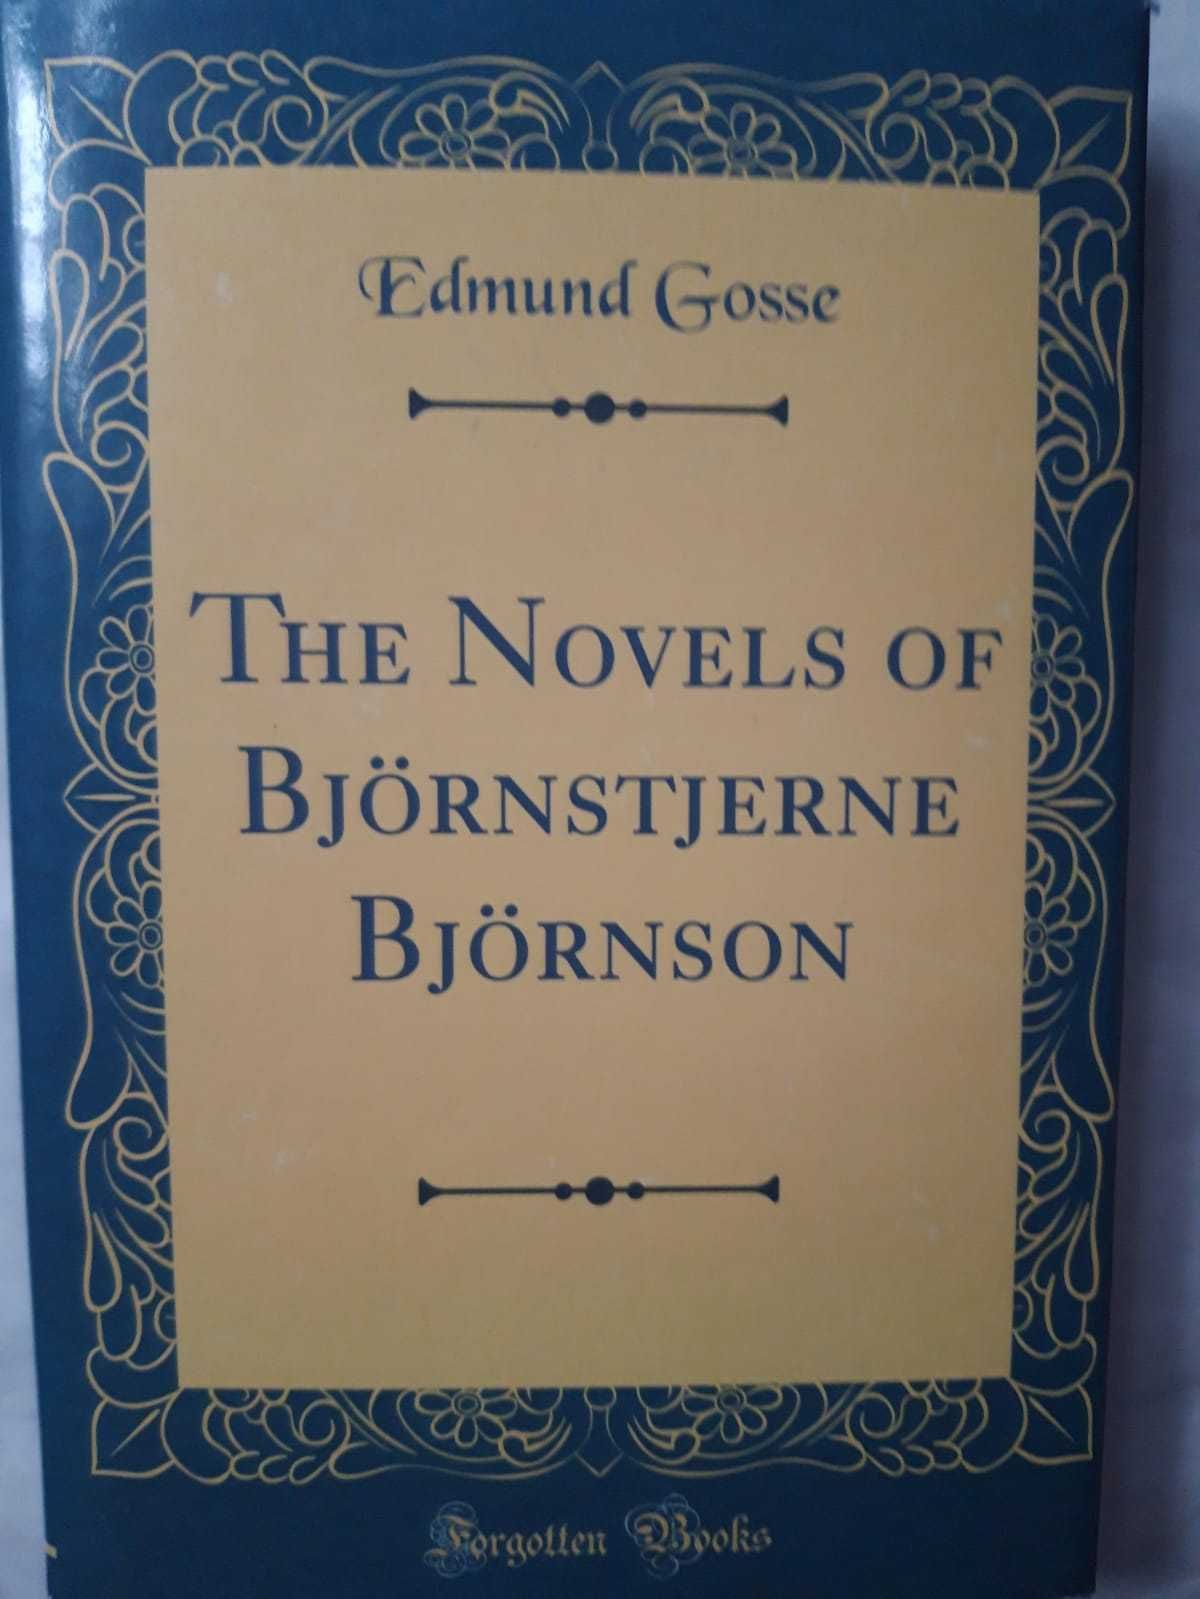 The Novels of Bjornstjerne Bjornson (Classic Reprint),  Edmund Gosse